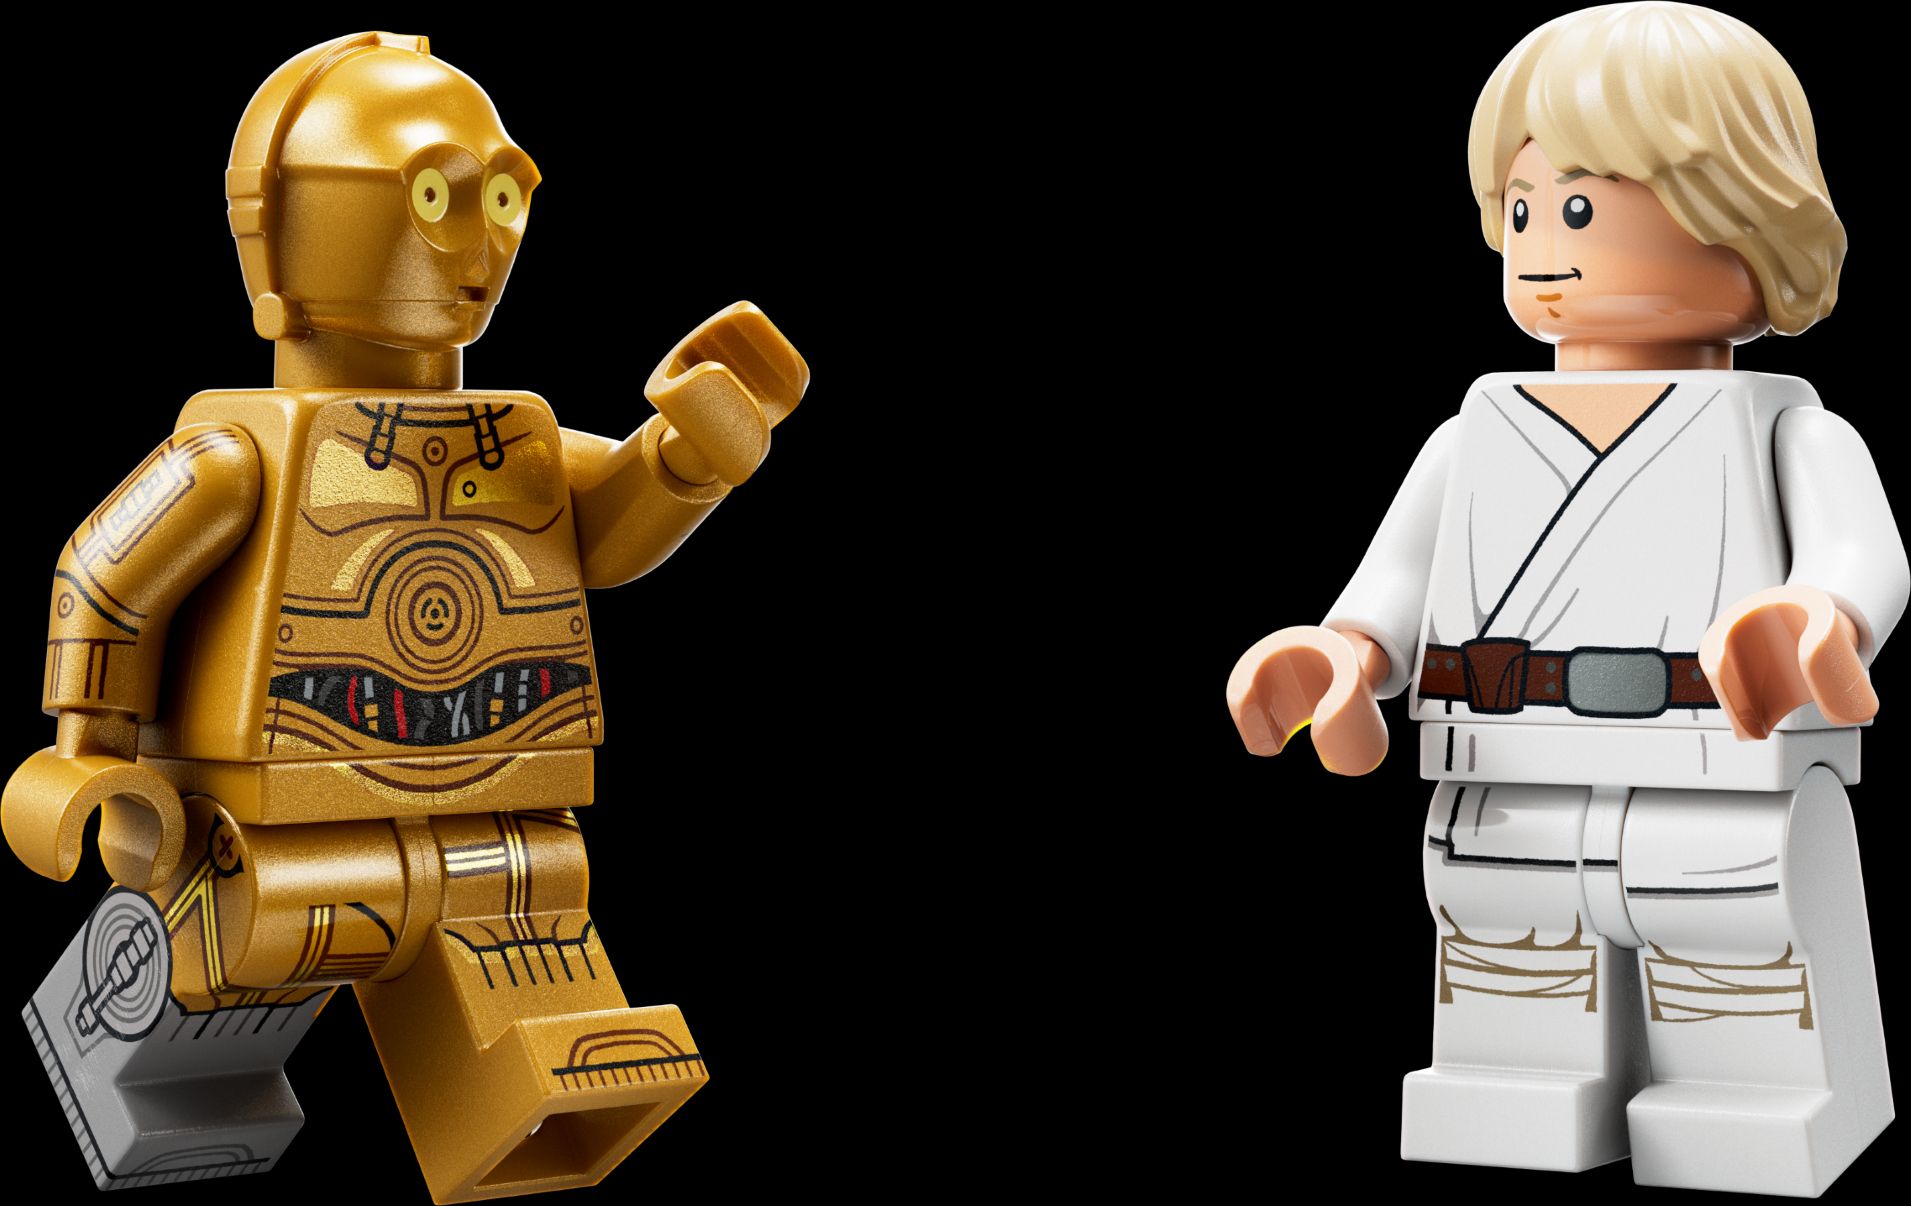 Star Wars Luke Landspeeder LEGO Set C 3PO Mini Figure